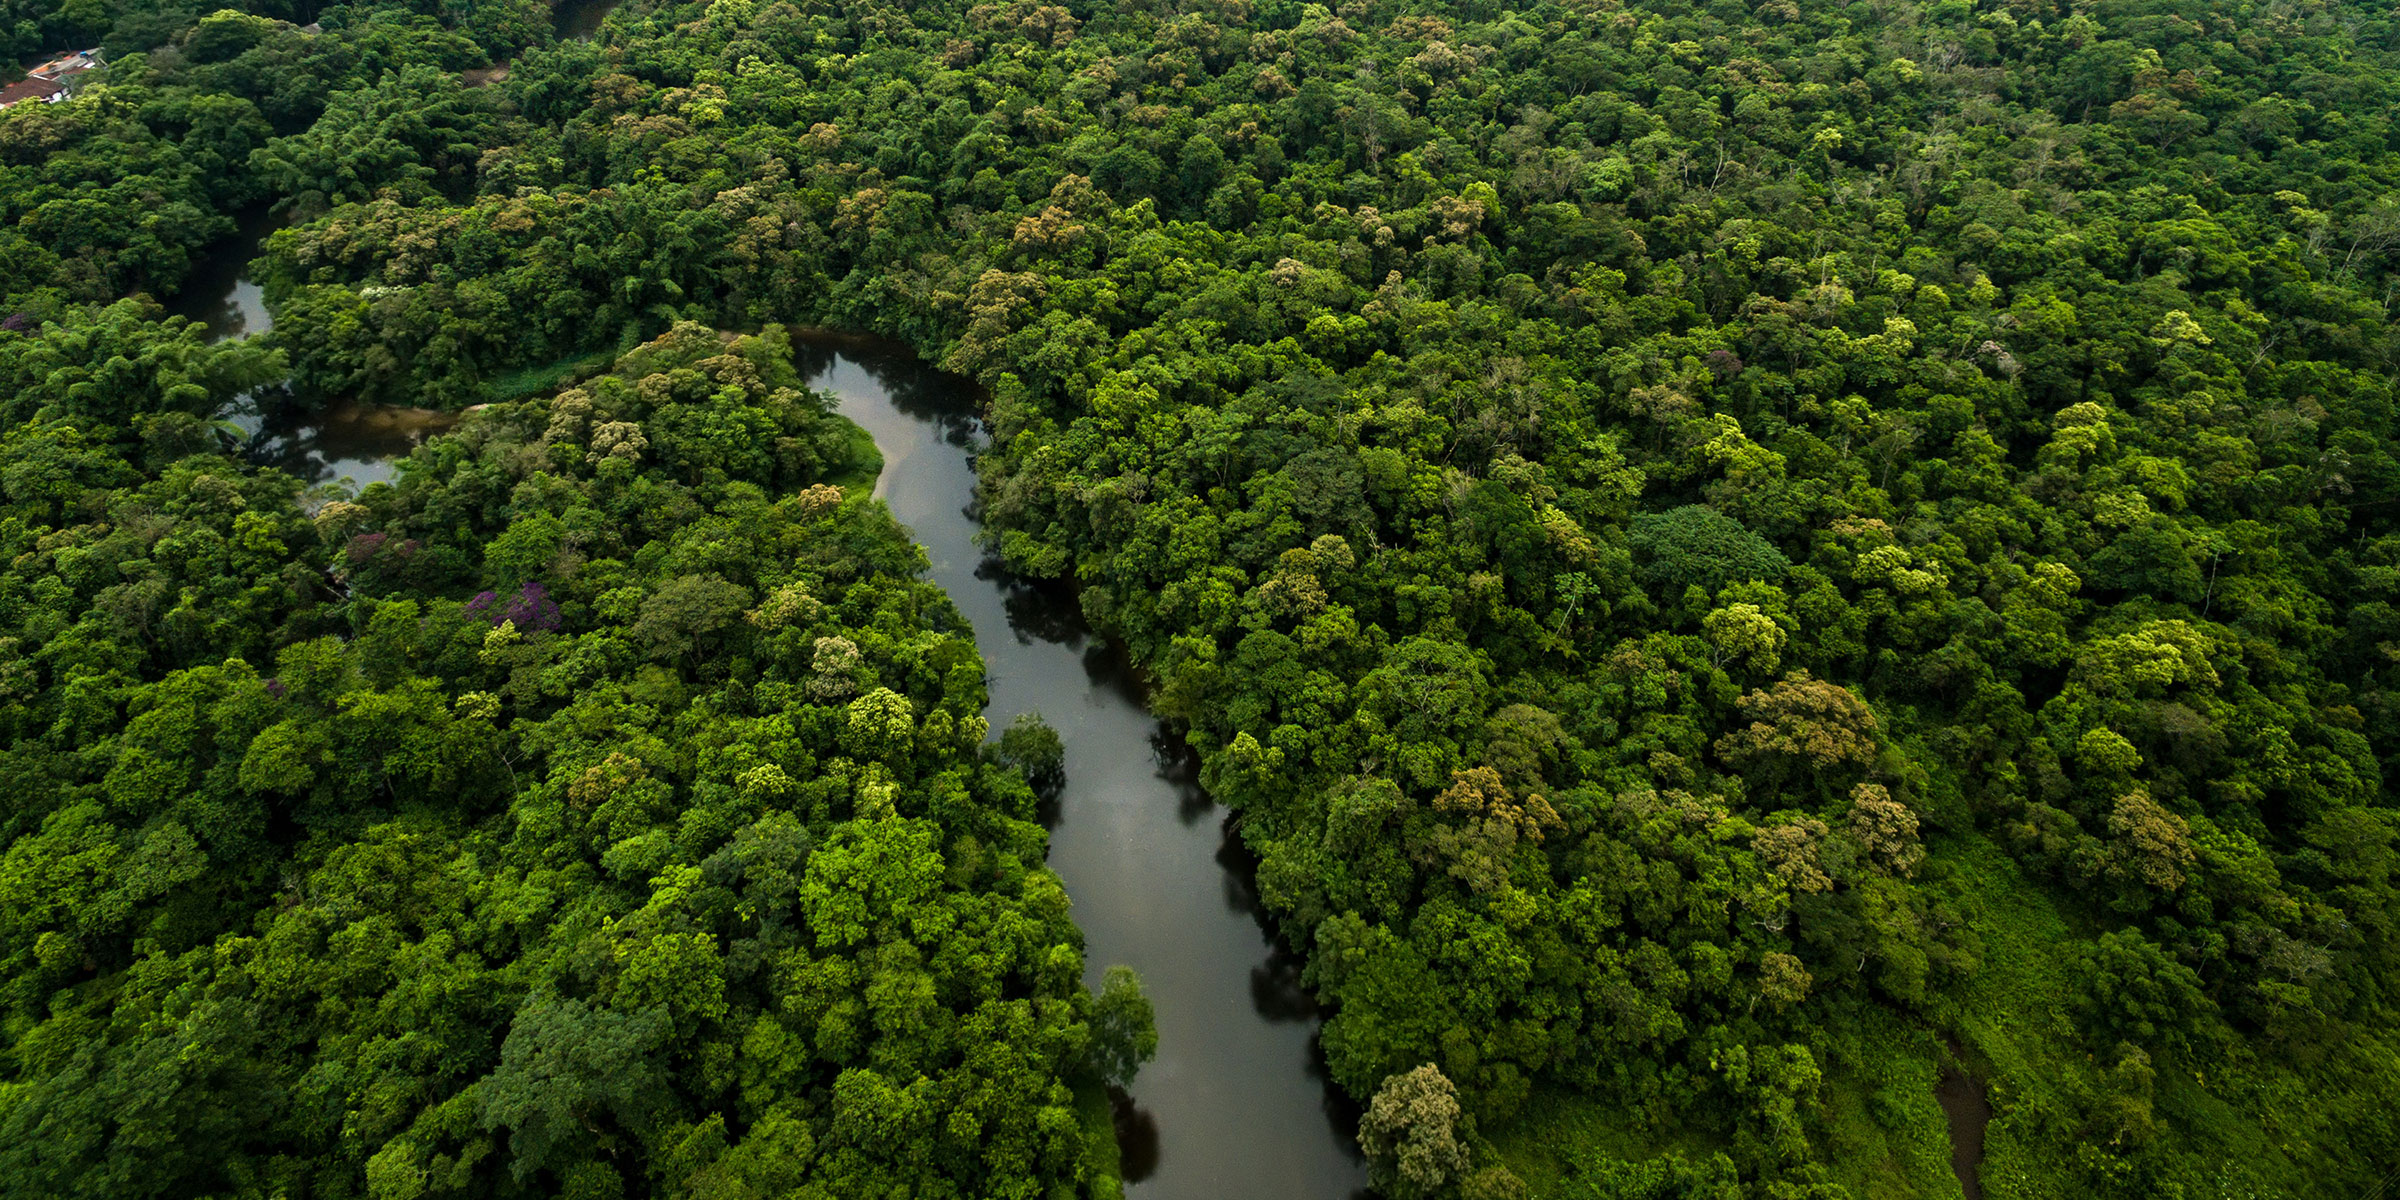 A dark river winds through a green expanse of Amazon rainforest